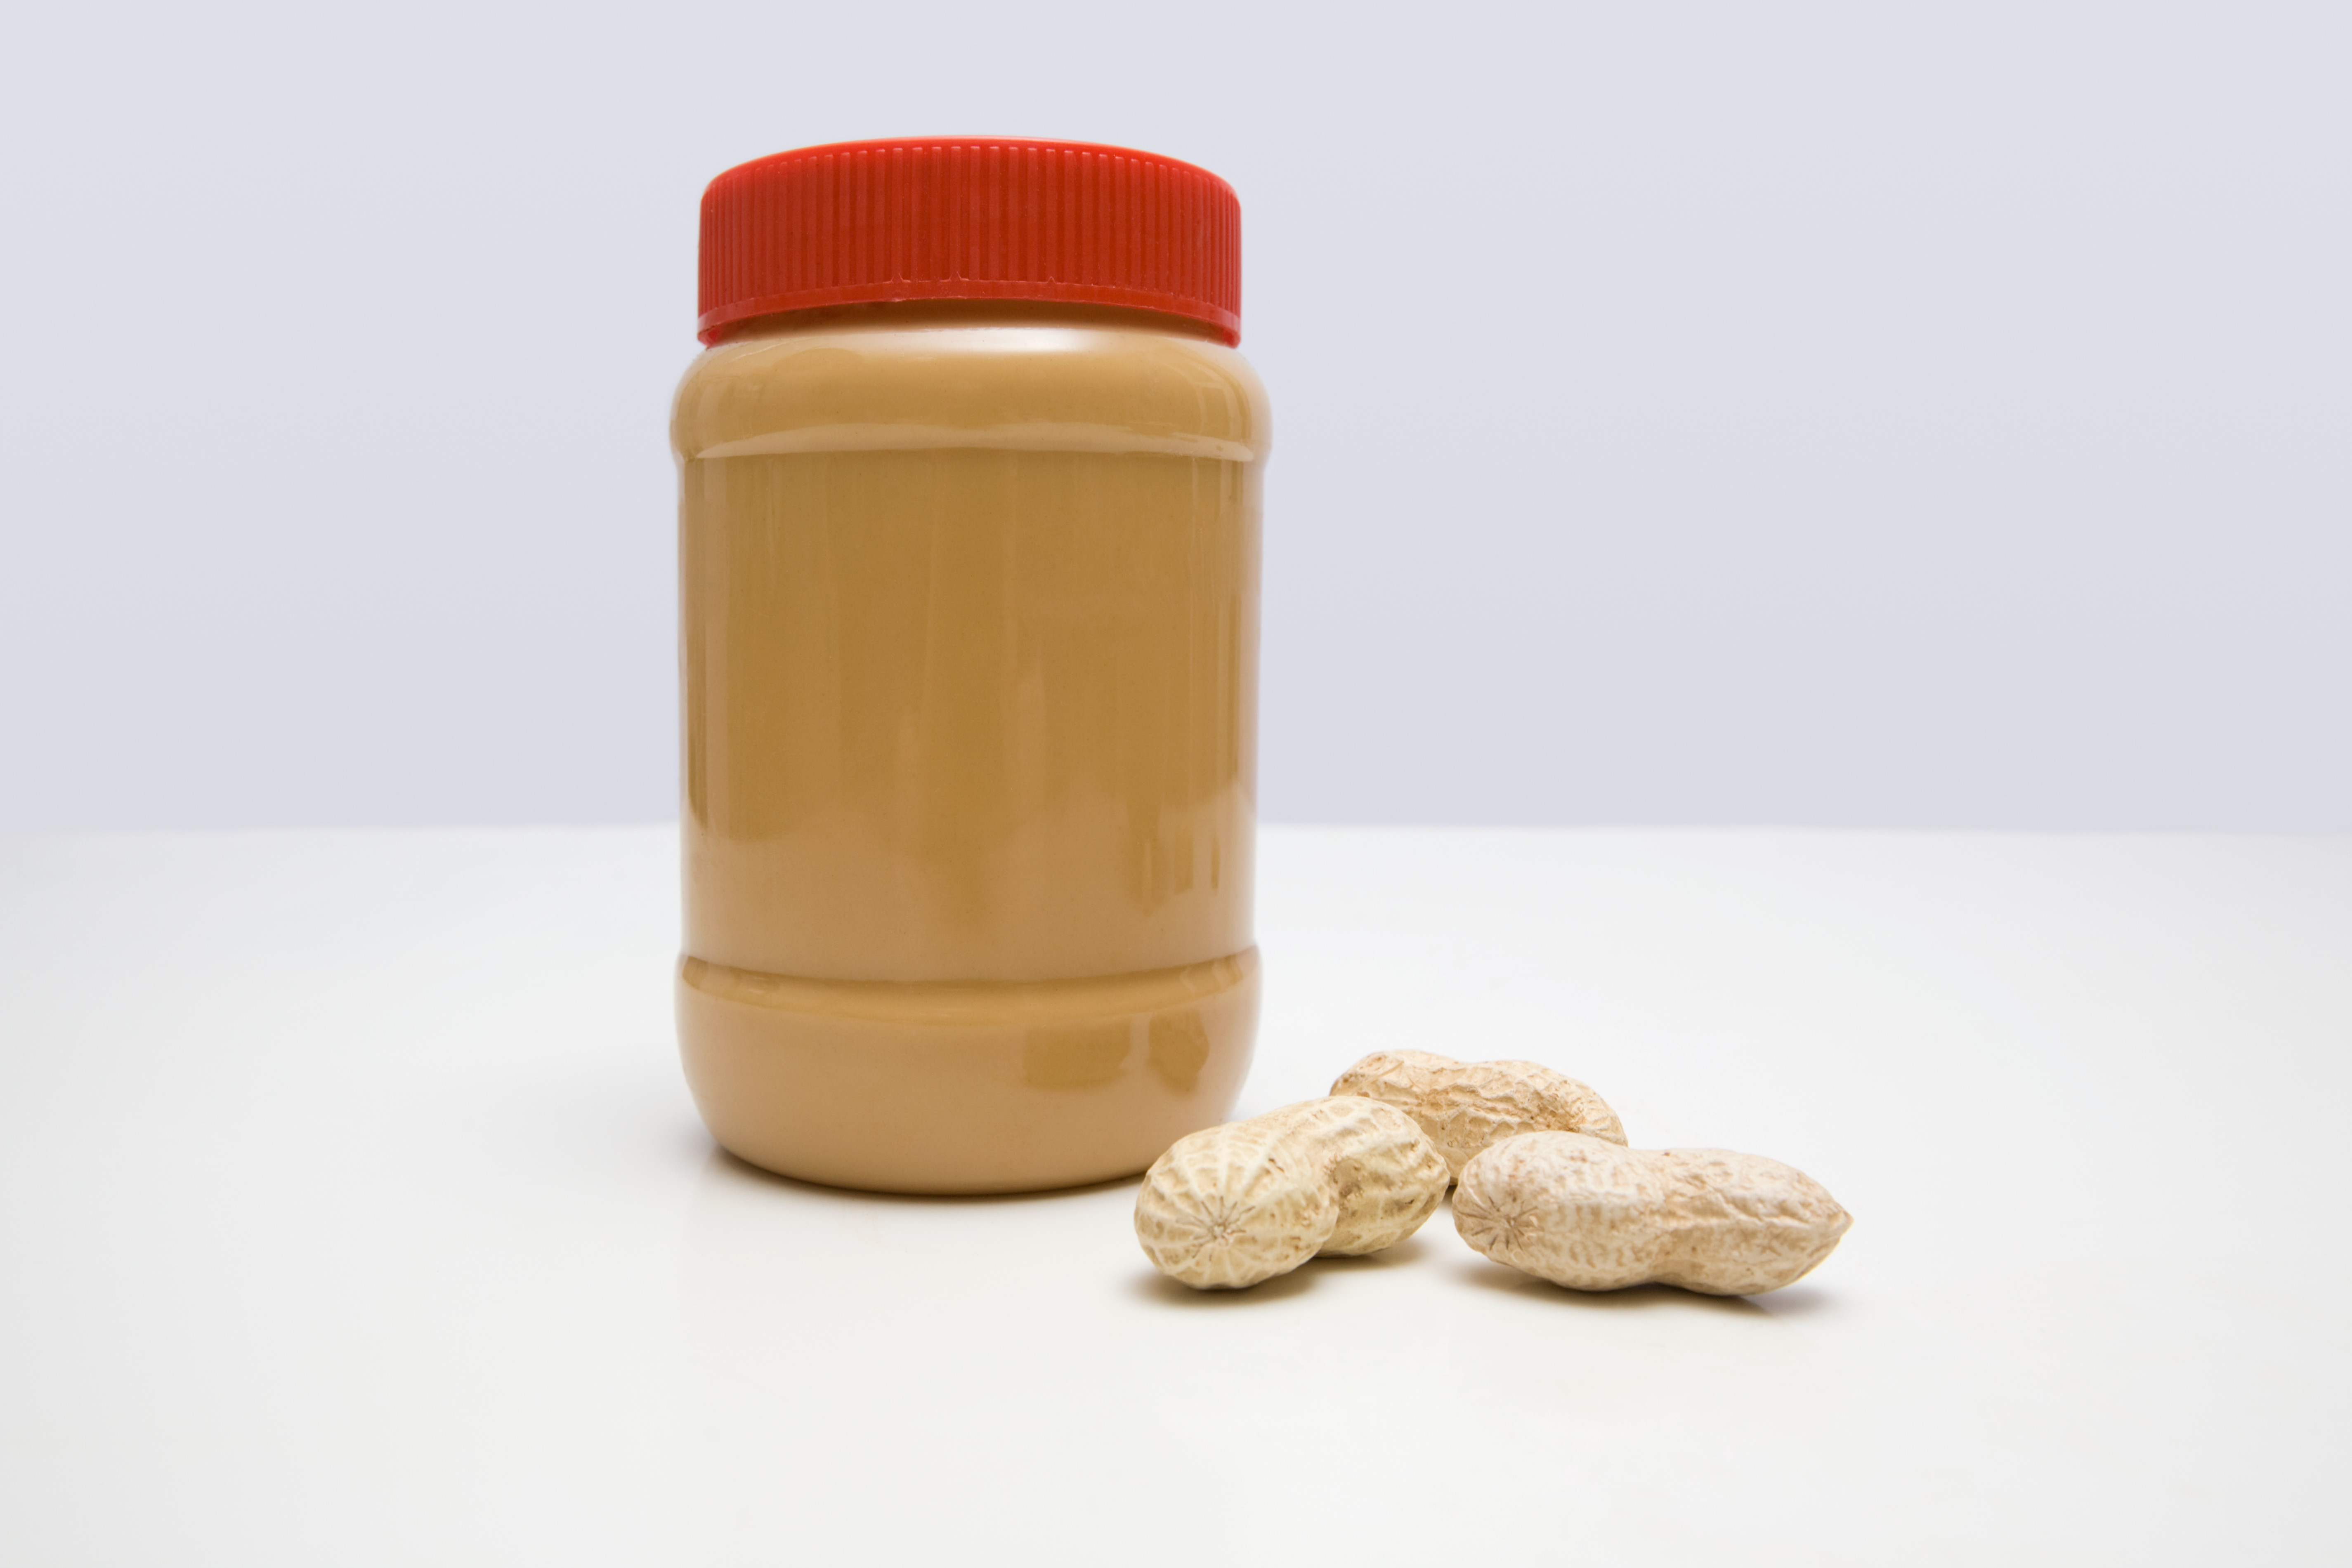 A jar of peanut butter and peanuts